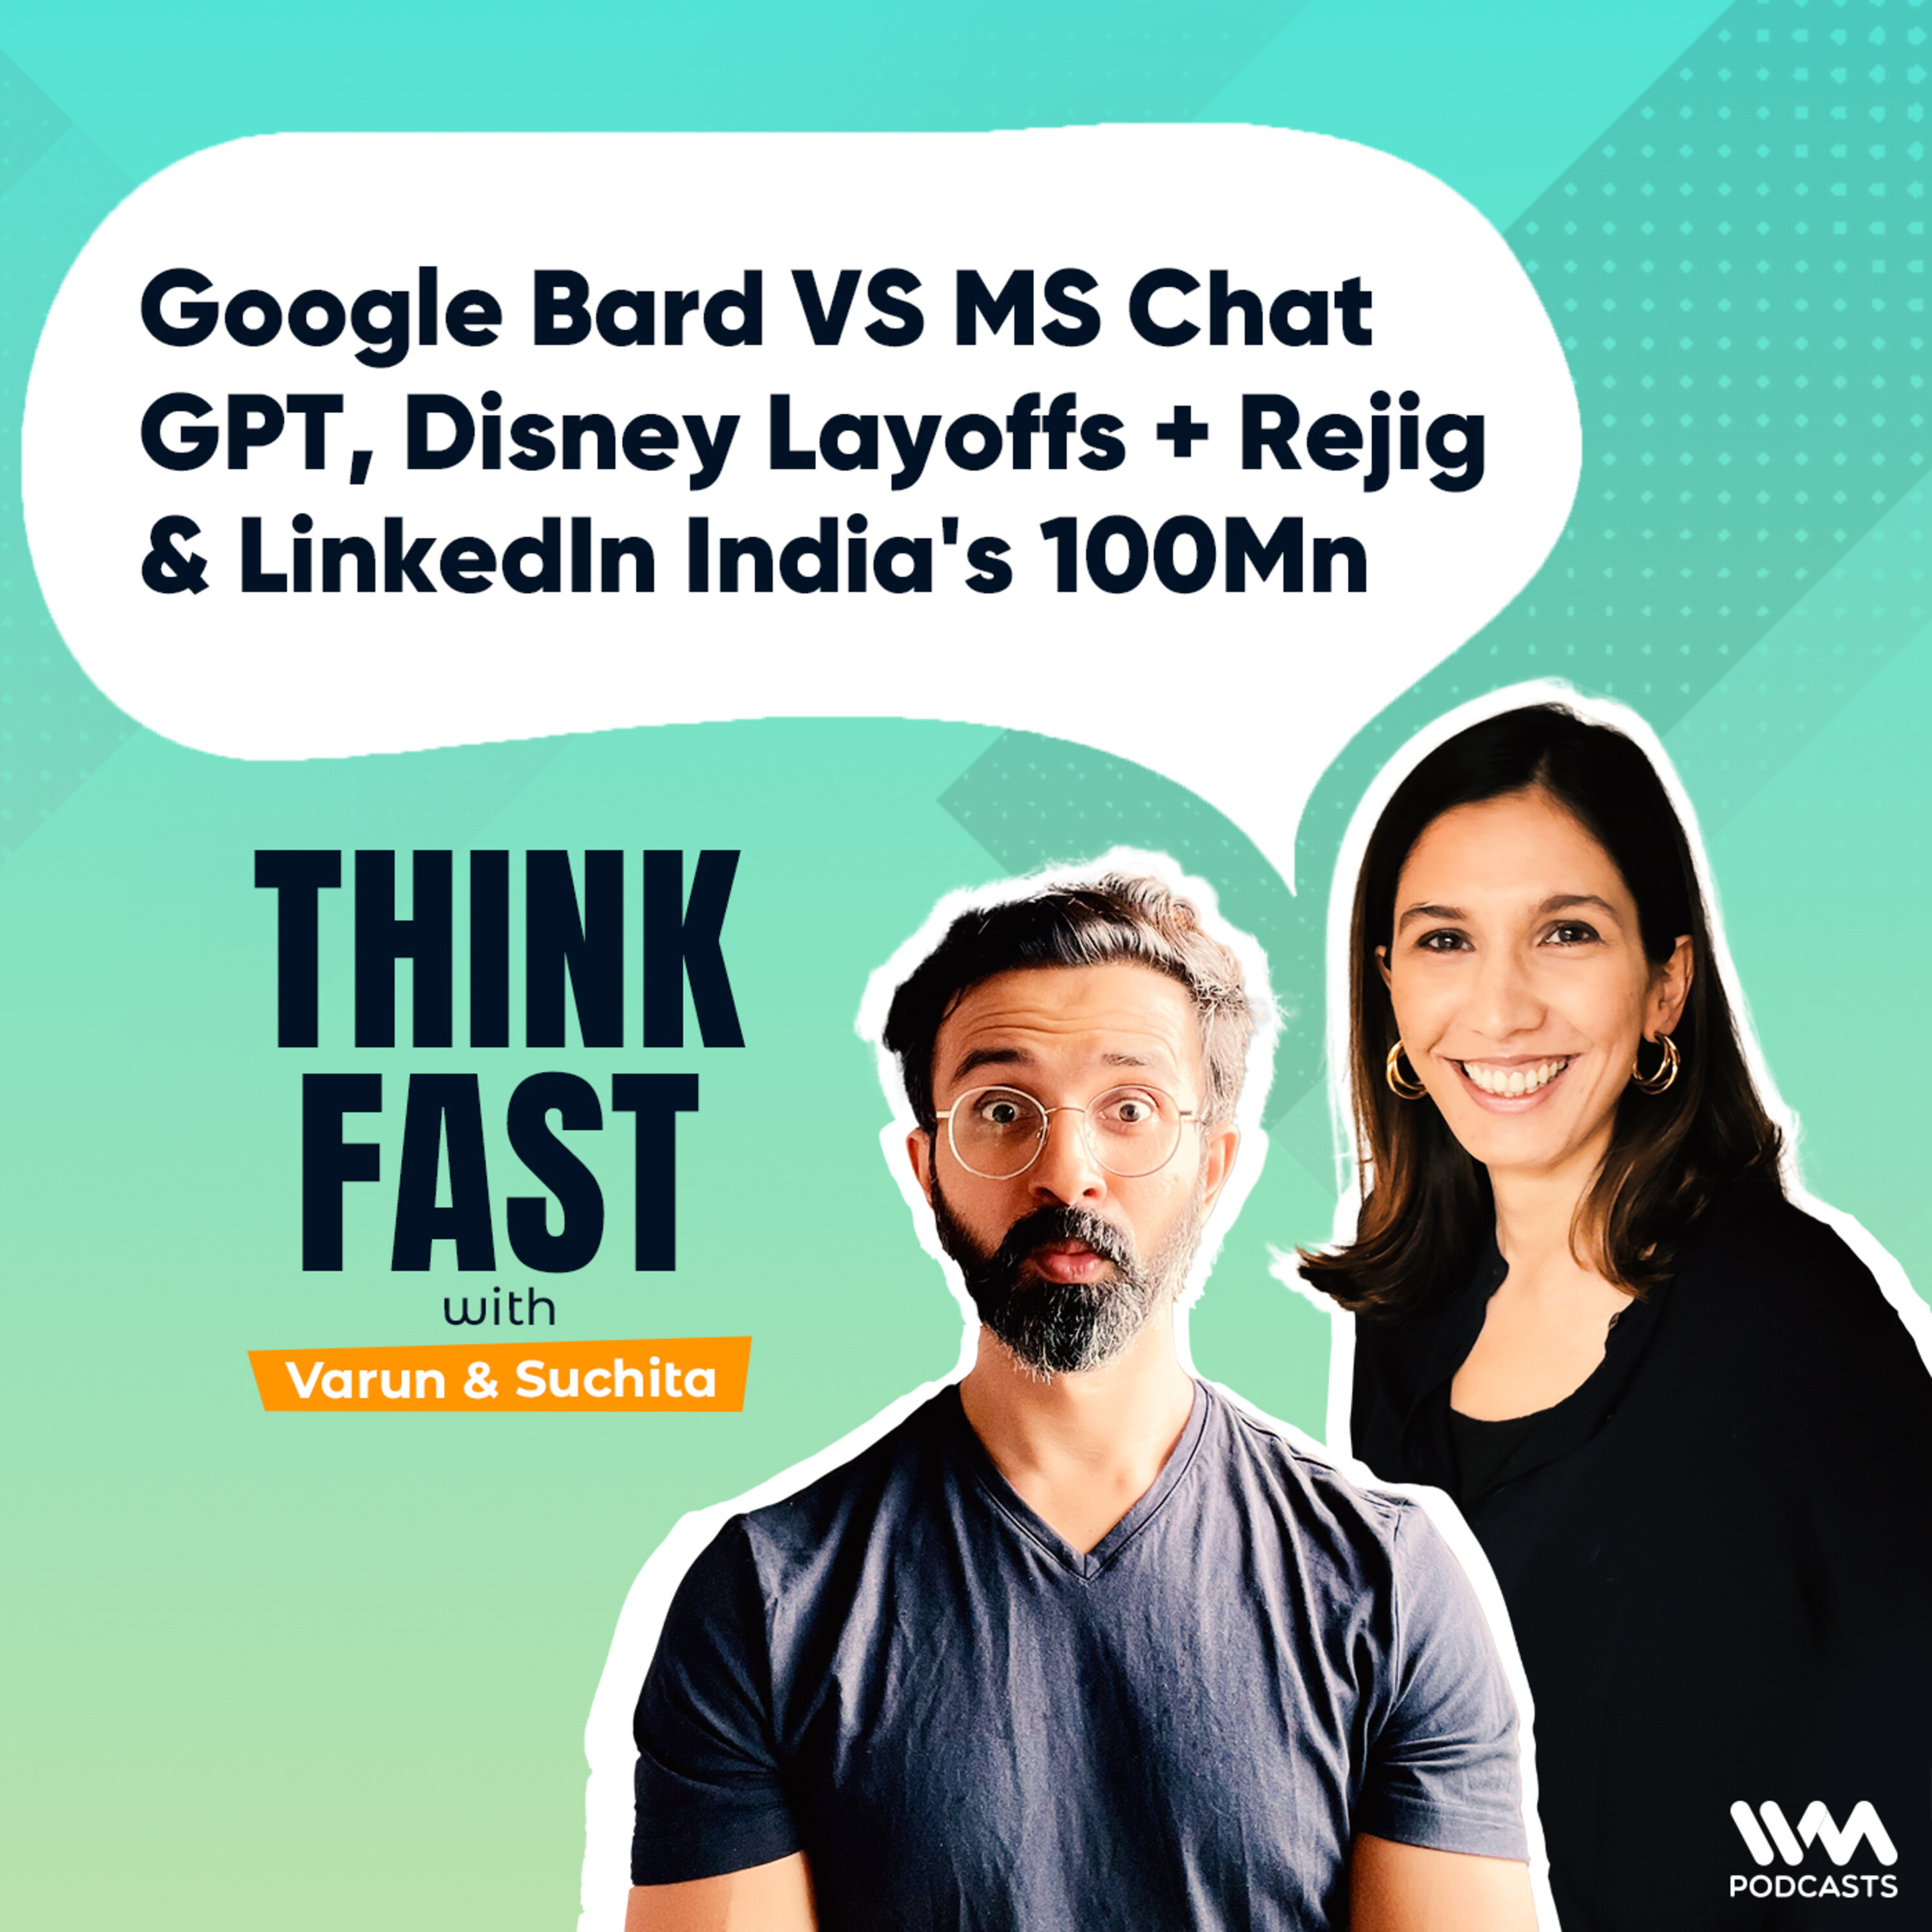 Google Bard VS MS Chat GPT, Disney Layoffs + Rejig, & LinkedIn India's 100Mn